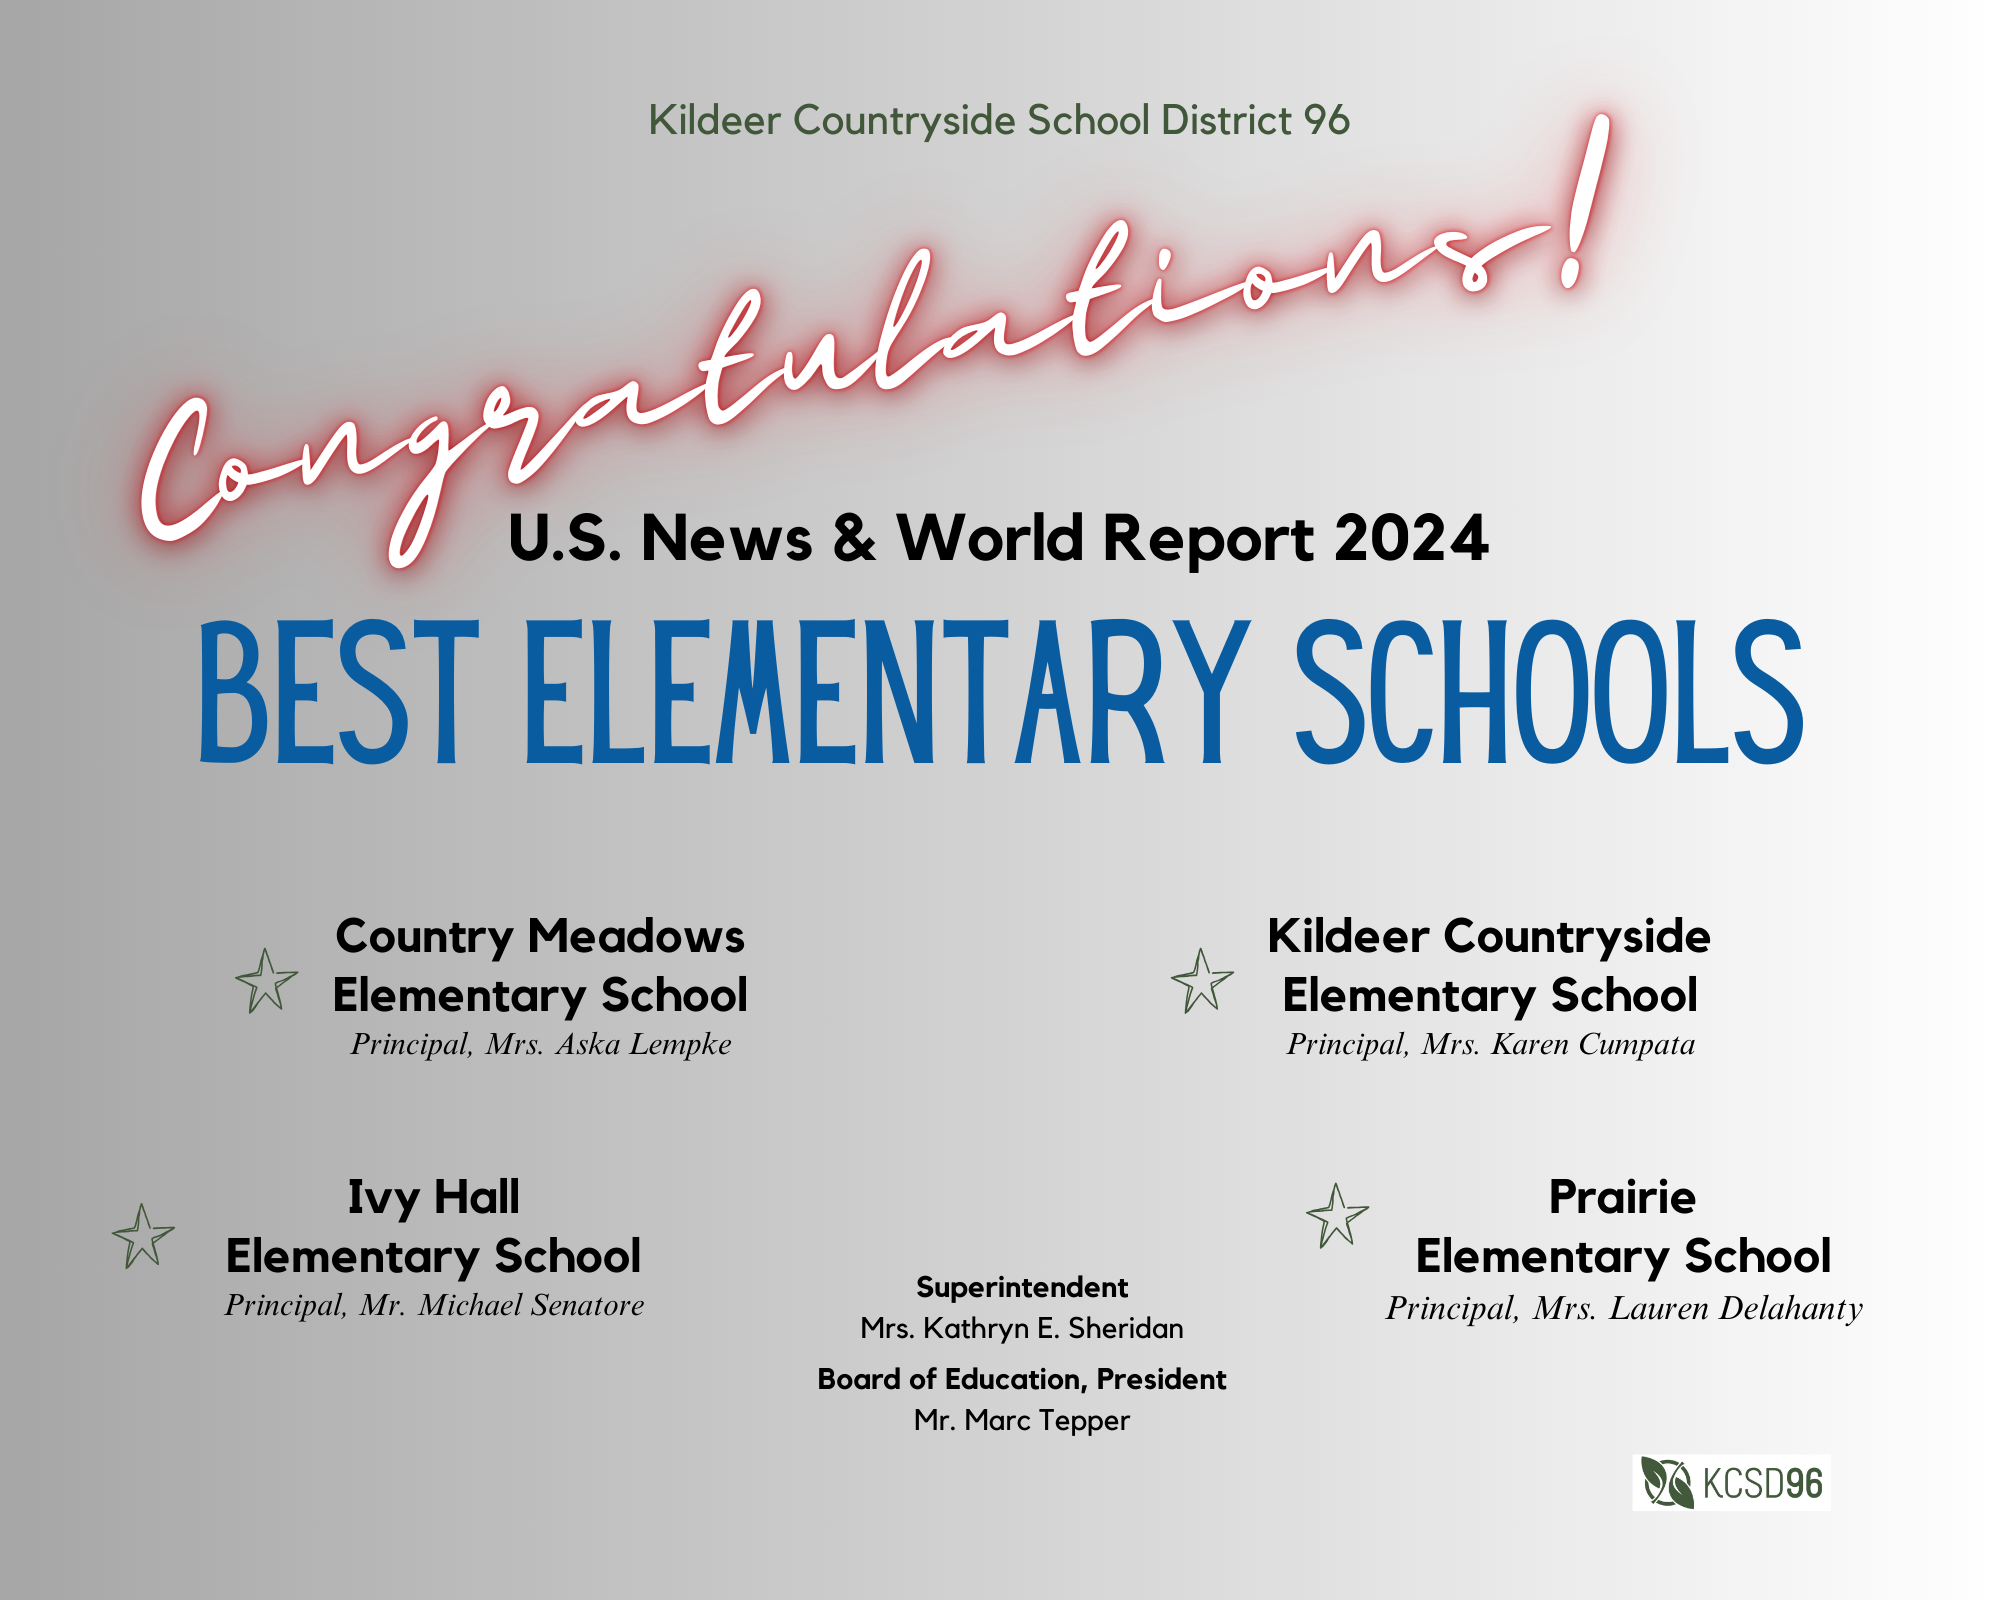 U.S. News & World Report's "Best Elementary Schools" ~ November 14, 2023